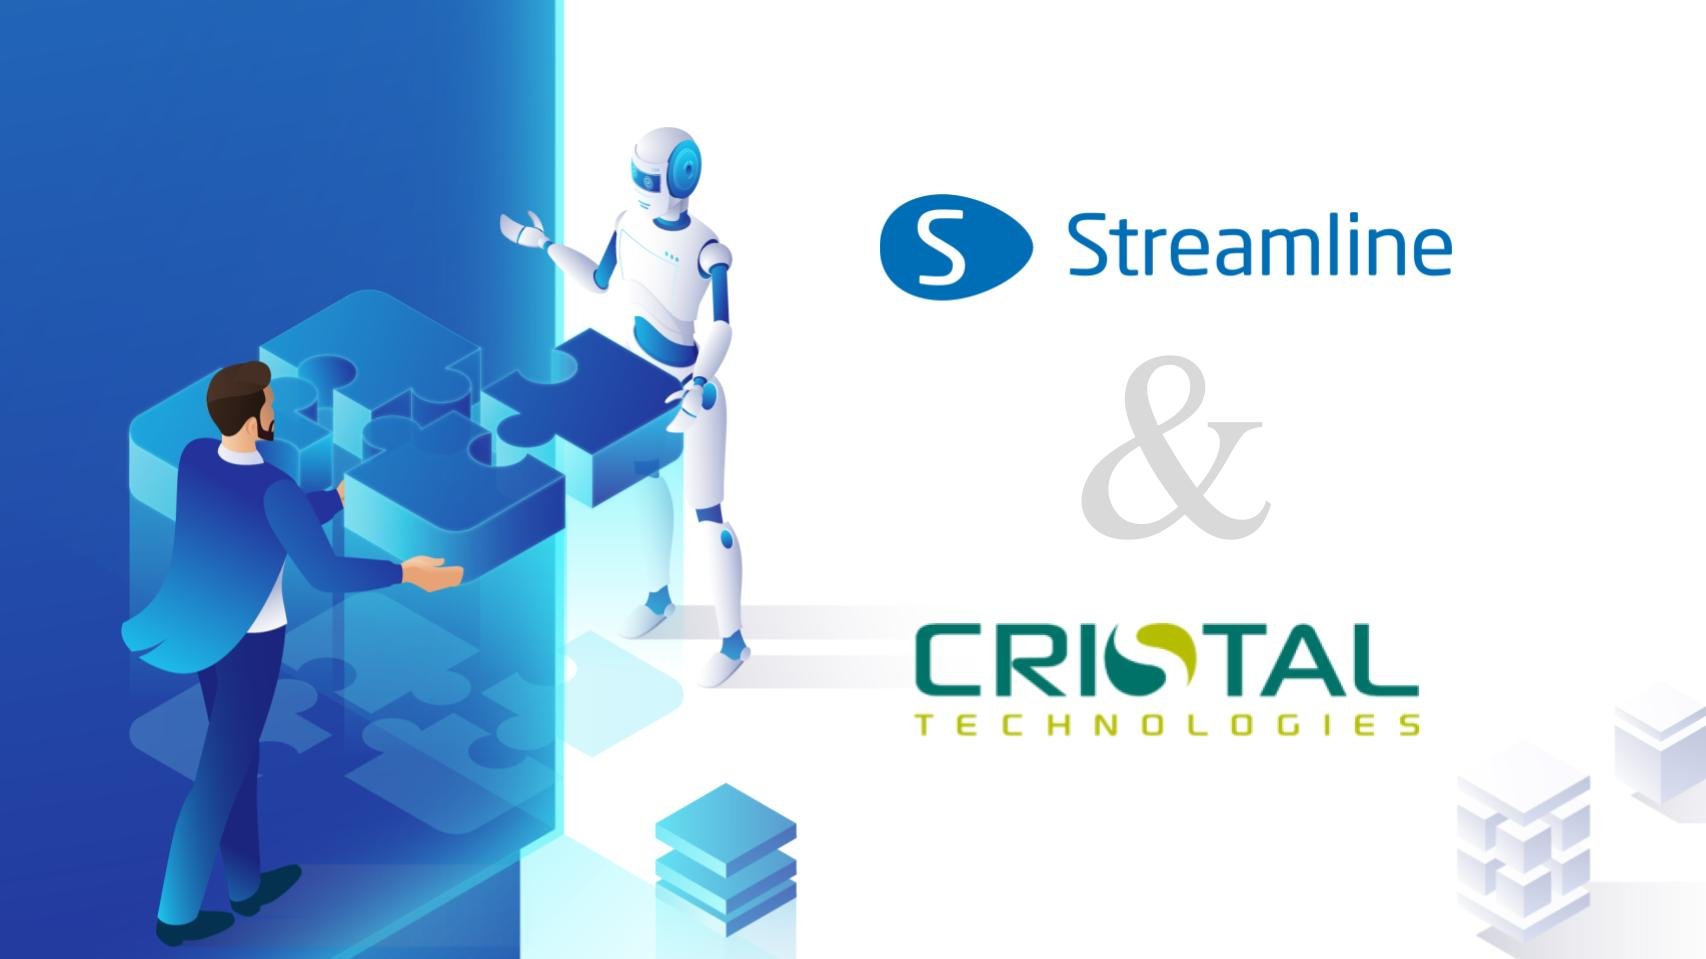 GMDH Streamline and Cristal Technologies announced a strategic partnershipe